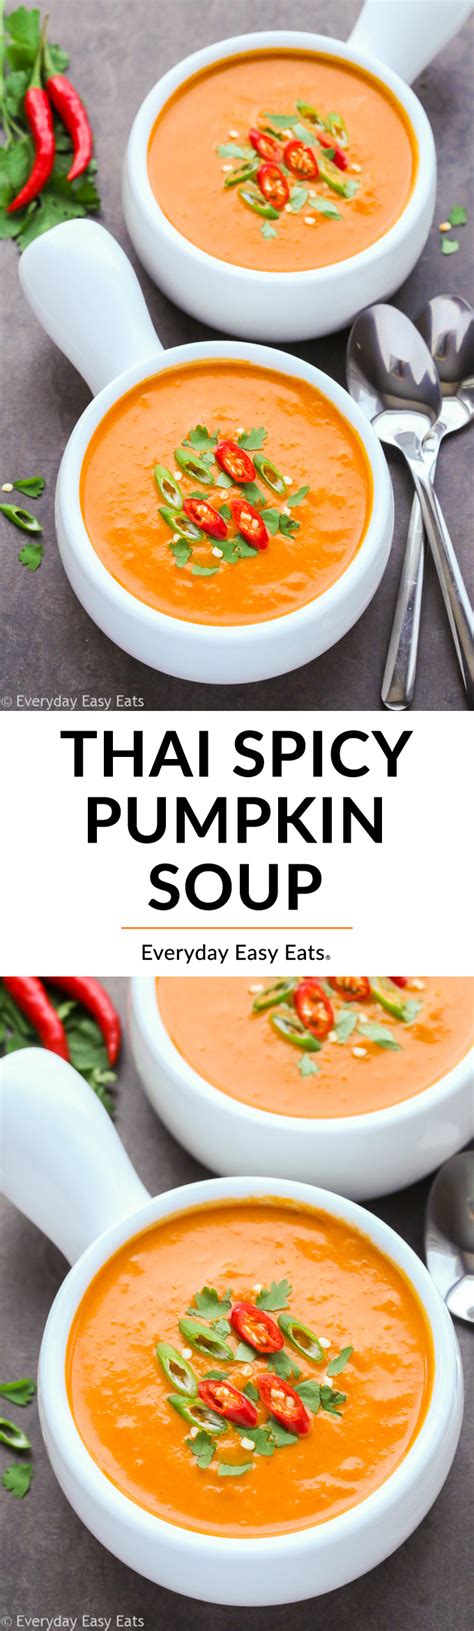 Thai Spicy Pumpkin Soup Everyday Easy Eats